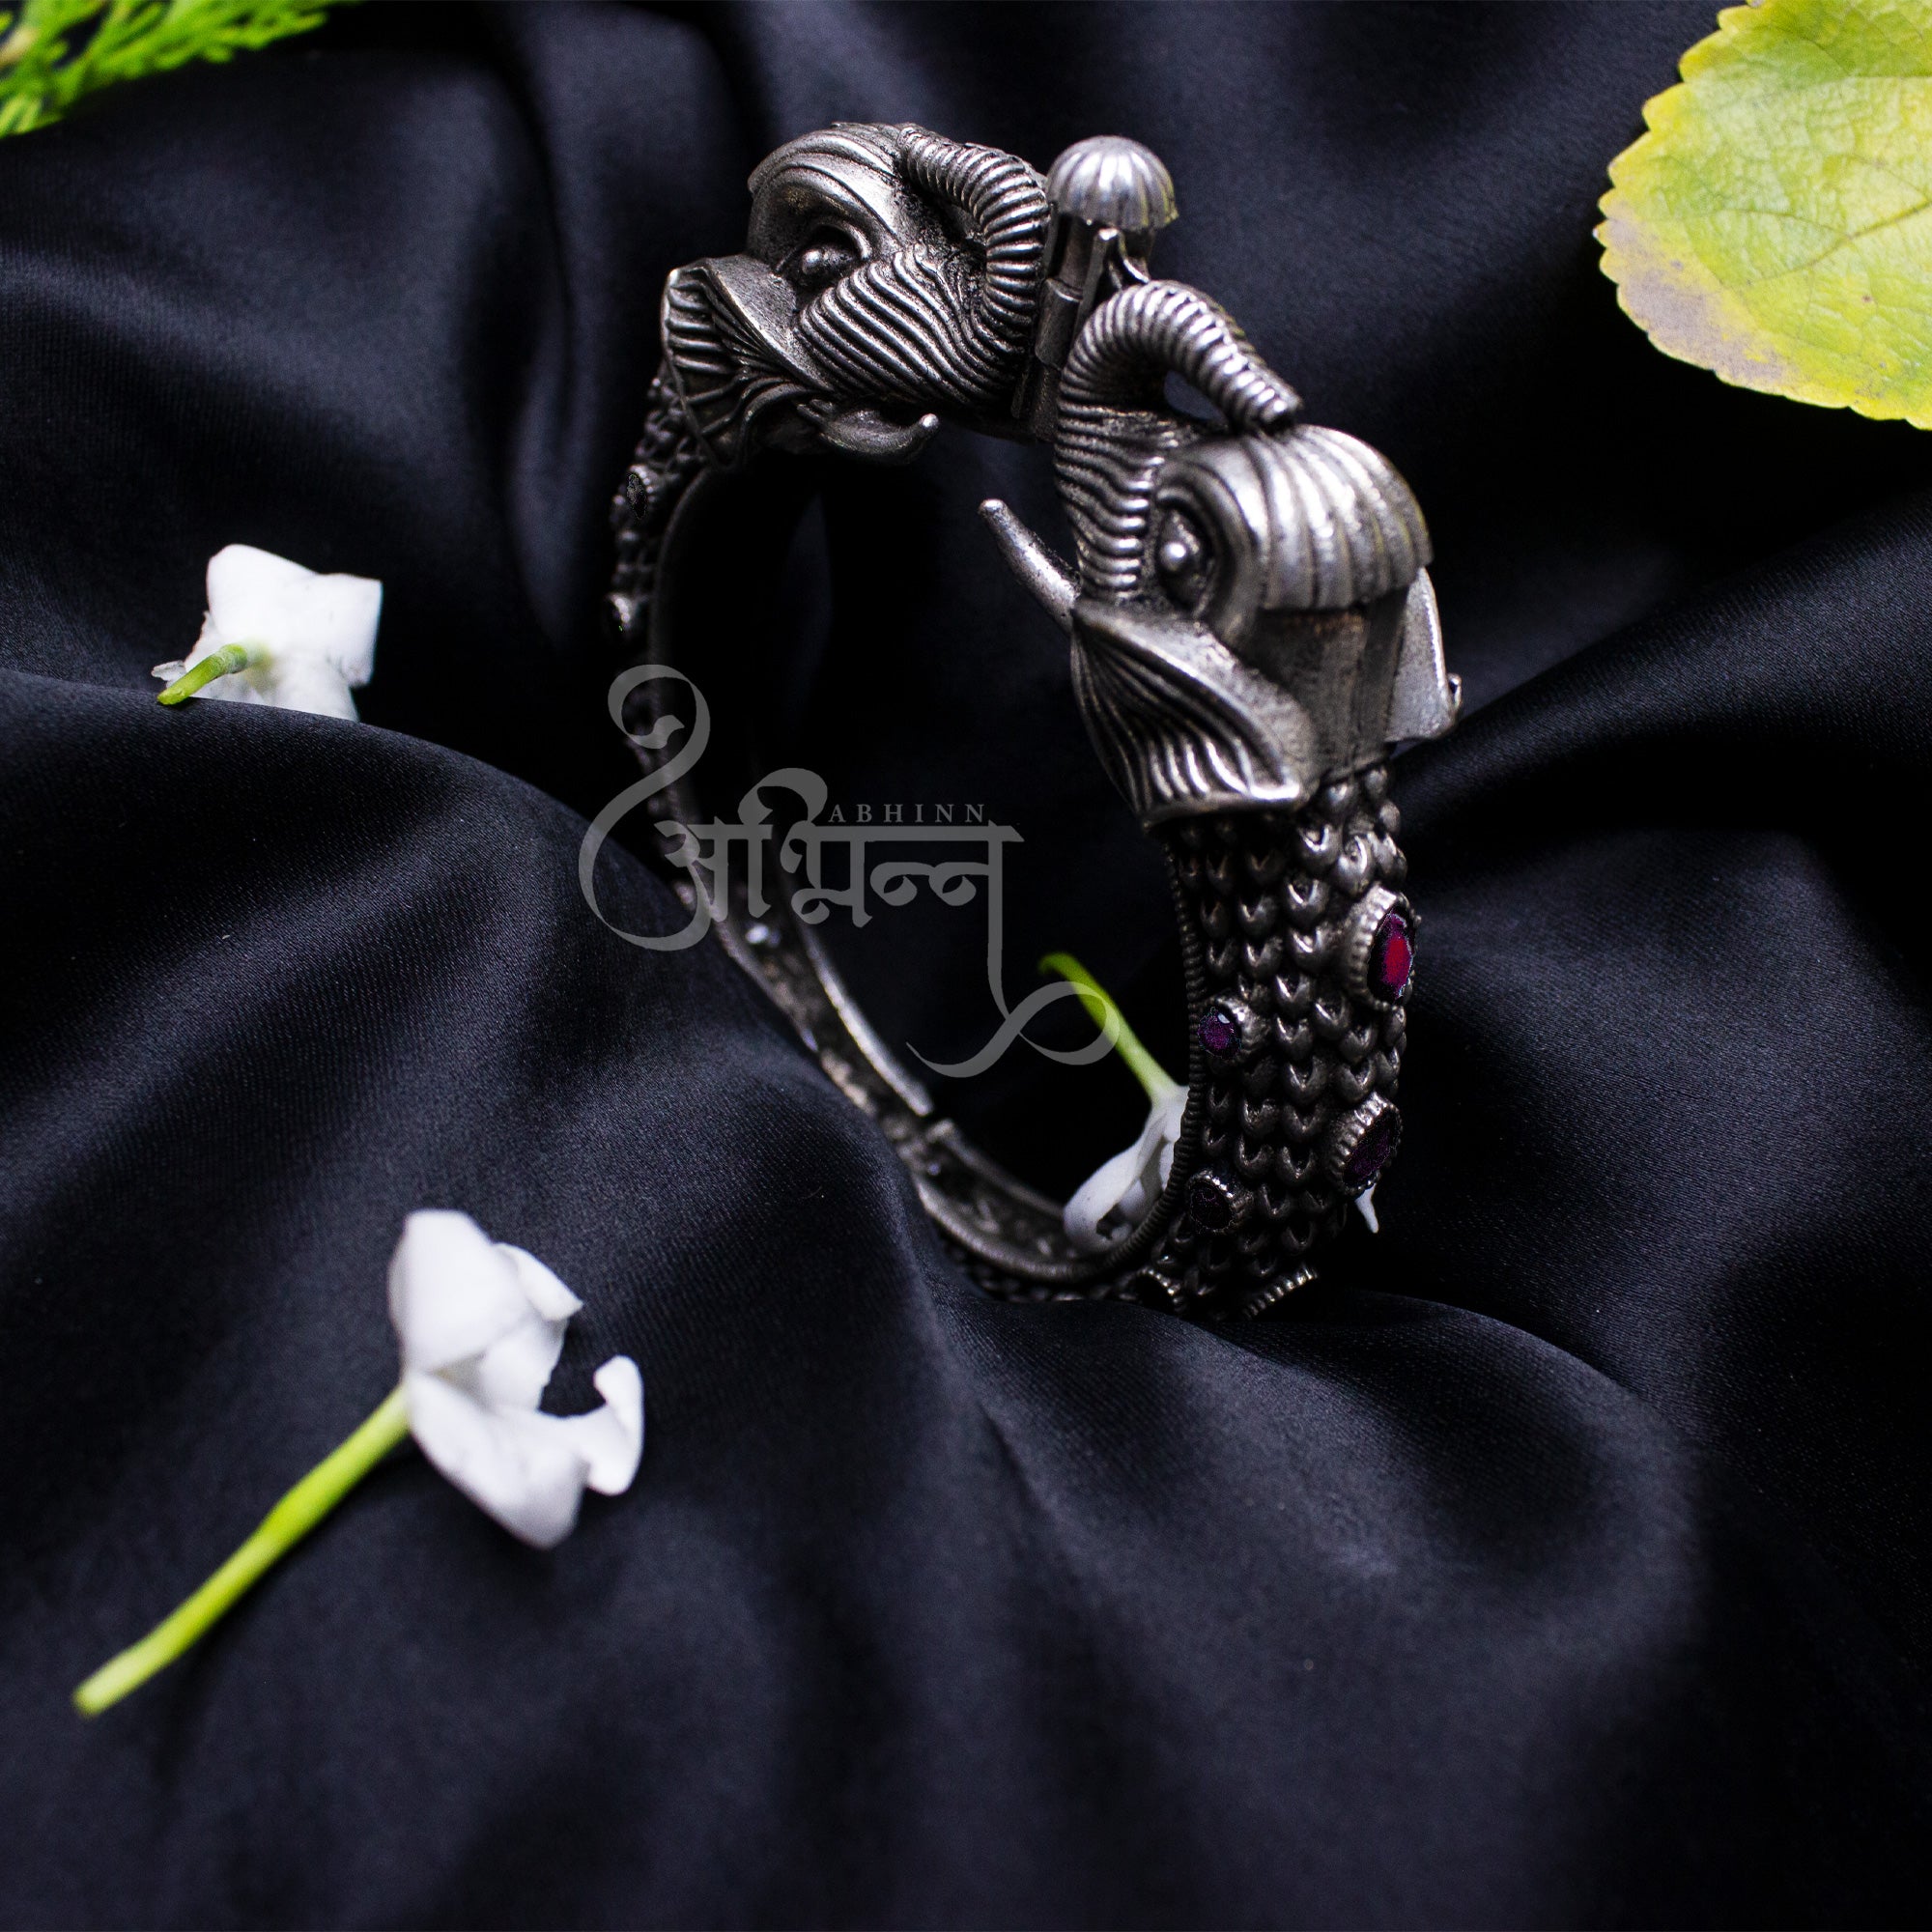 Abhinn Silver Replica Bracelet Studded With Elephant Design And Magenta CZ Stones For Women 